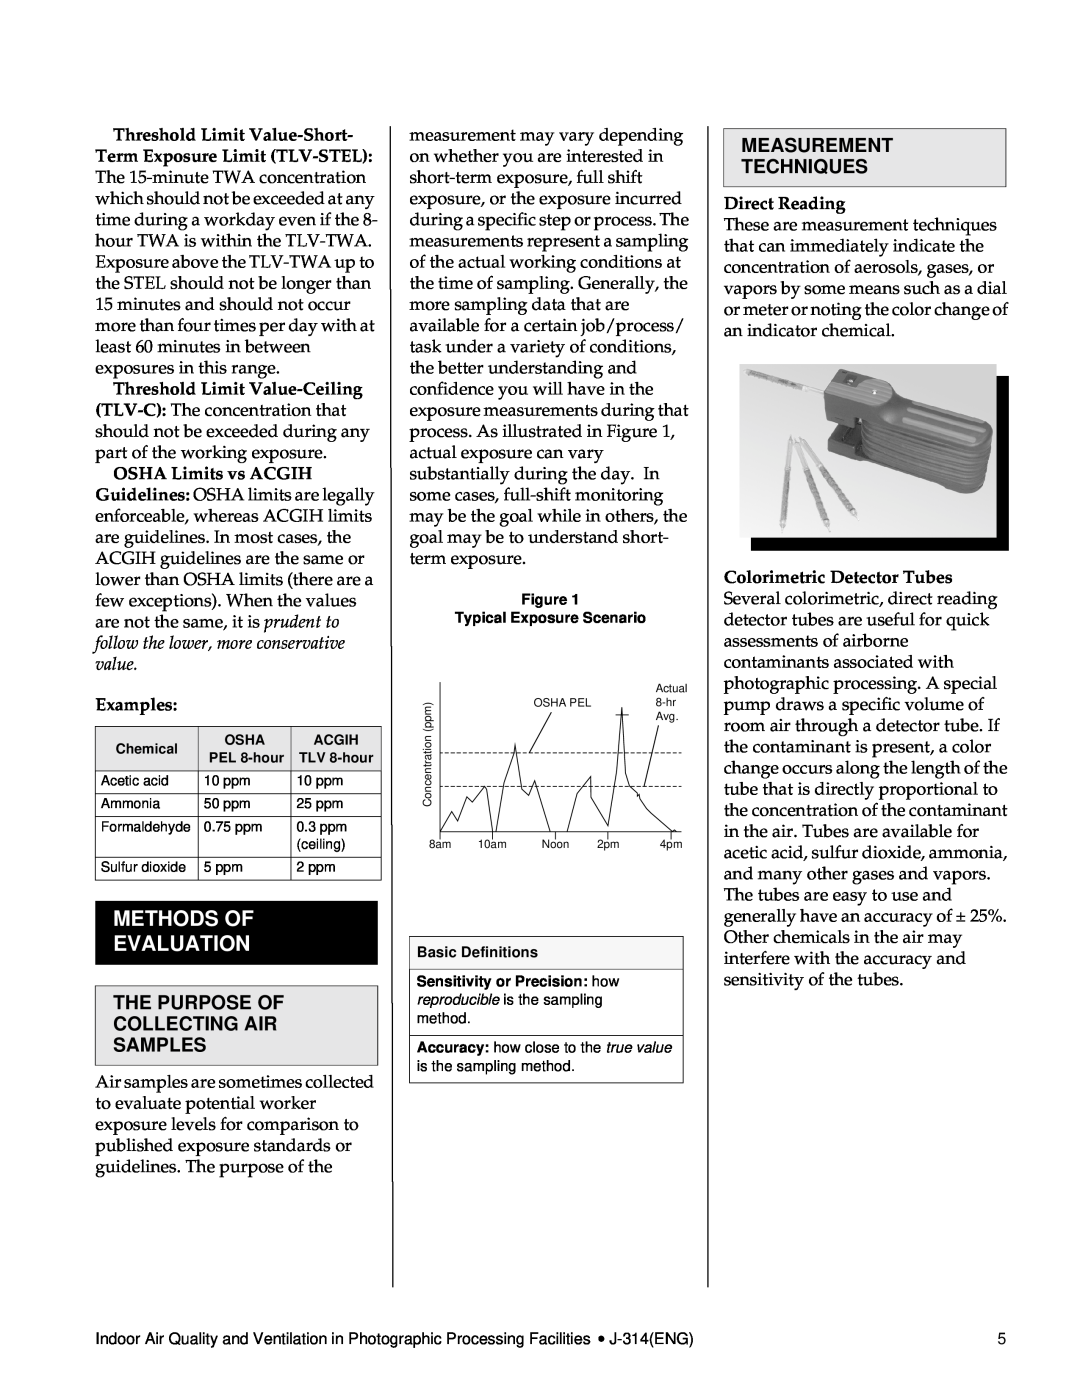 Kodak J-314 manual Methods Of Evaluation, The Purpose Of Collecting Air Samples, Measurement Techniques 